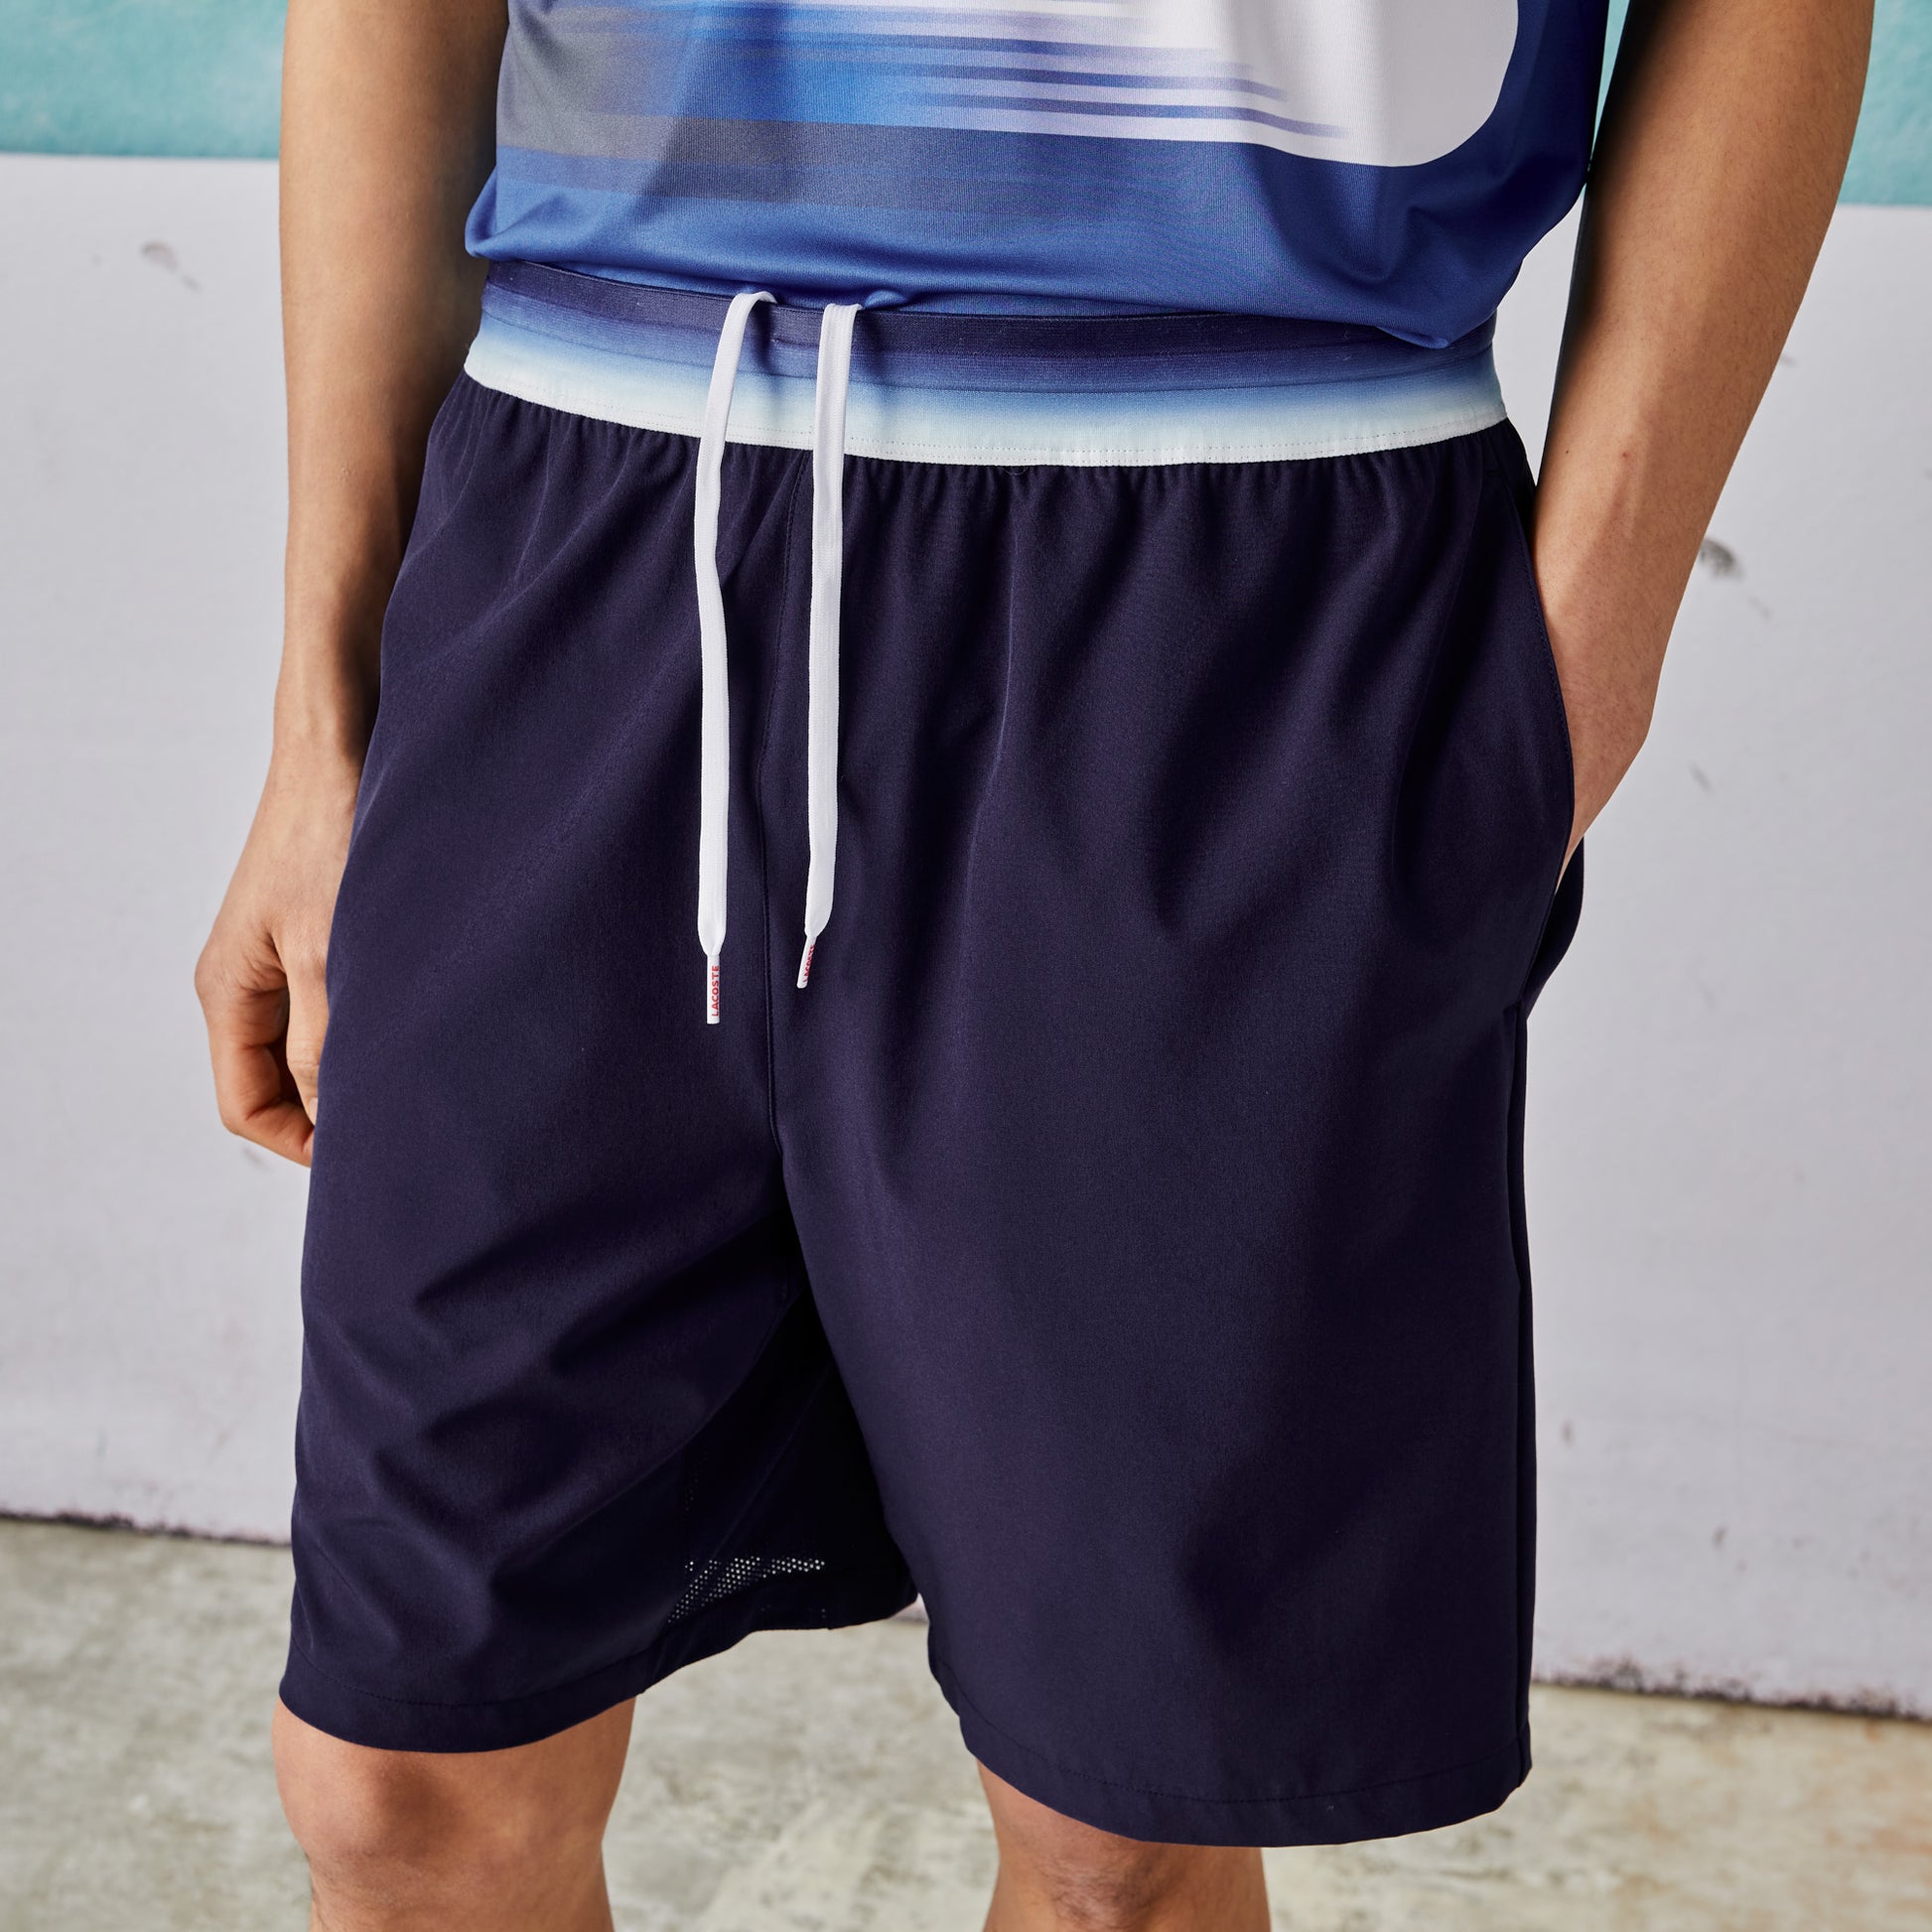 Lacoste Novak Djokovic Men's Tennis Shorts Blue (6)